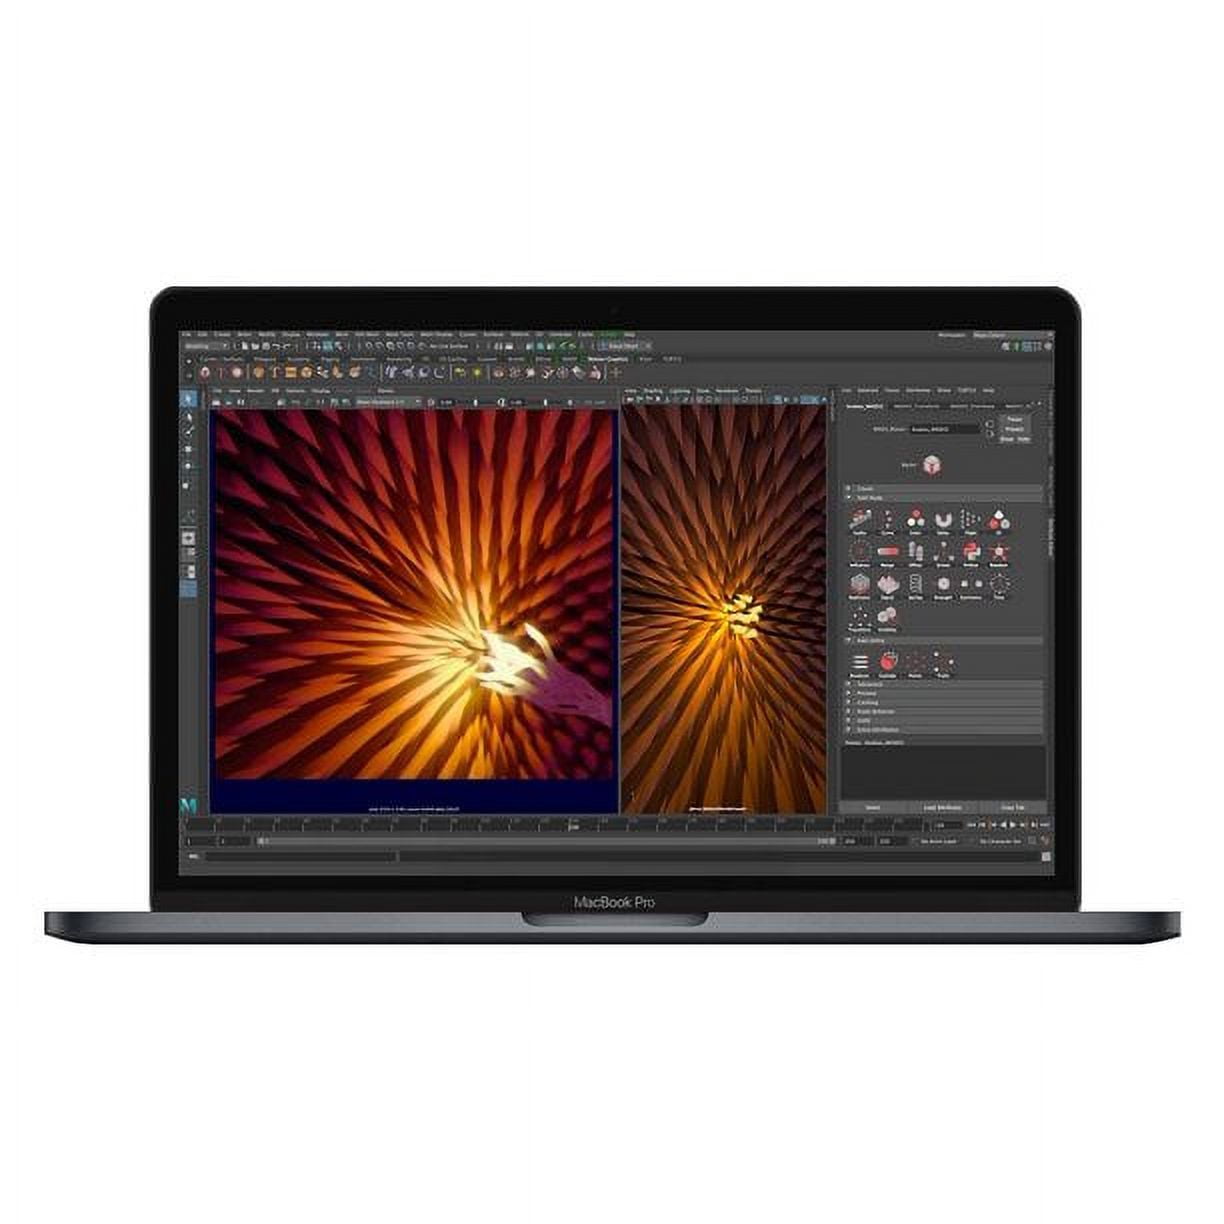 Apple 15.4in MacBook Pro Laptop (Retina, Touch Bar, 2.6GHz 6-Core Intel  Core i7, 16GB RAM, 512GB SSD Storage) Space Gray (MR942LL/A) (2018 Model)